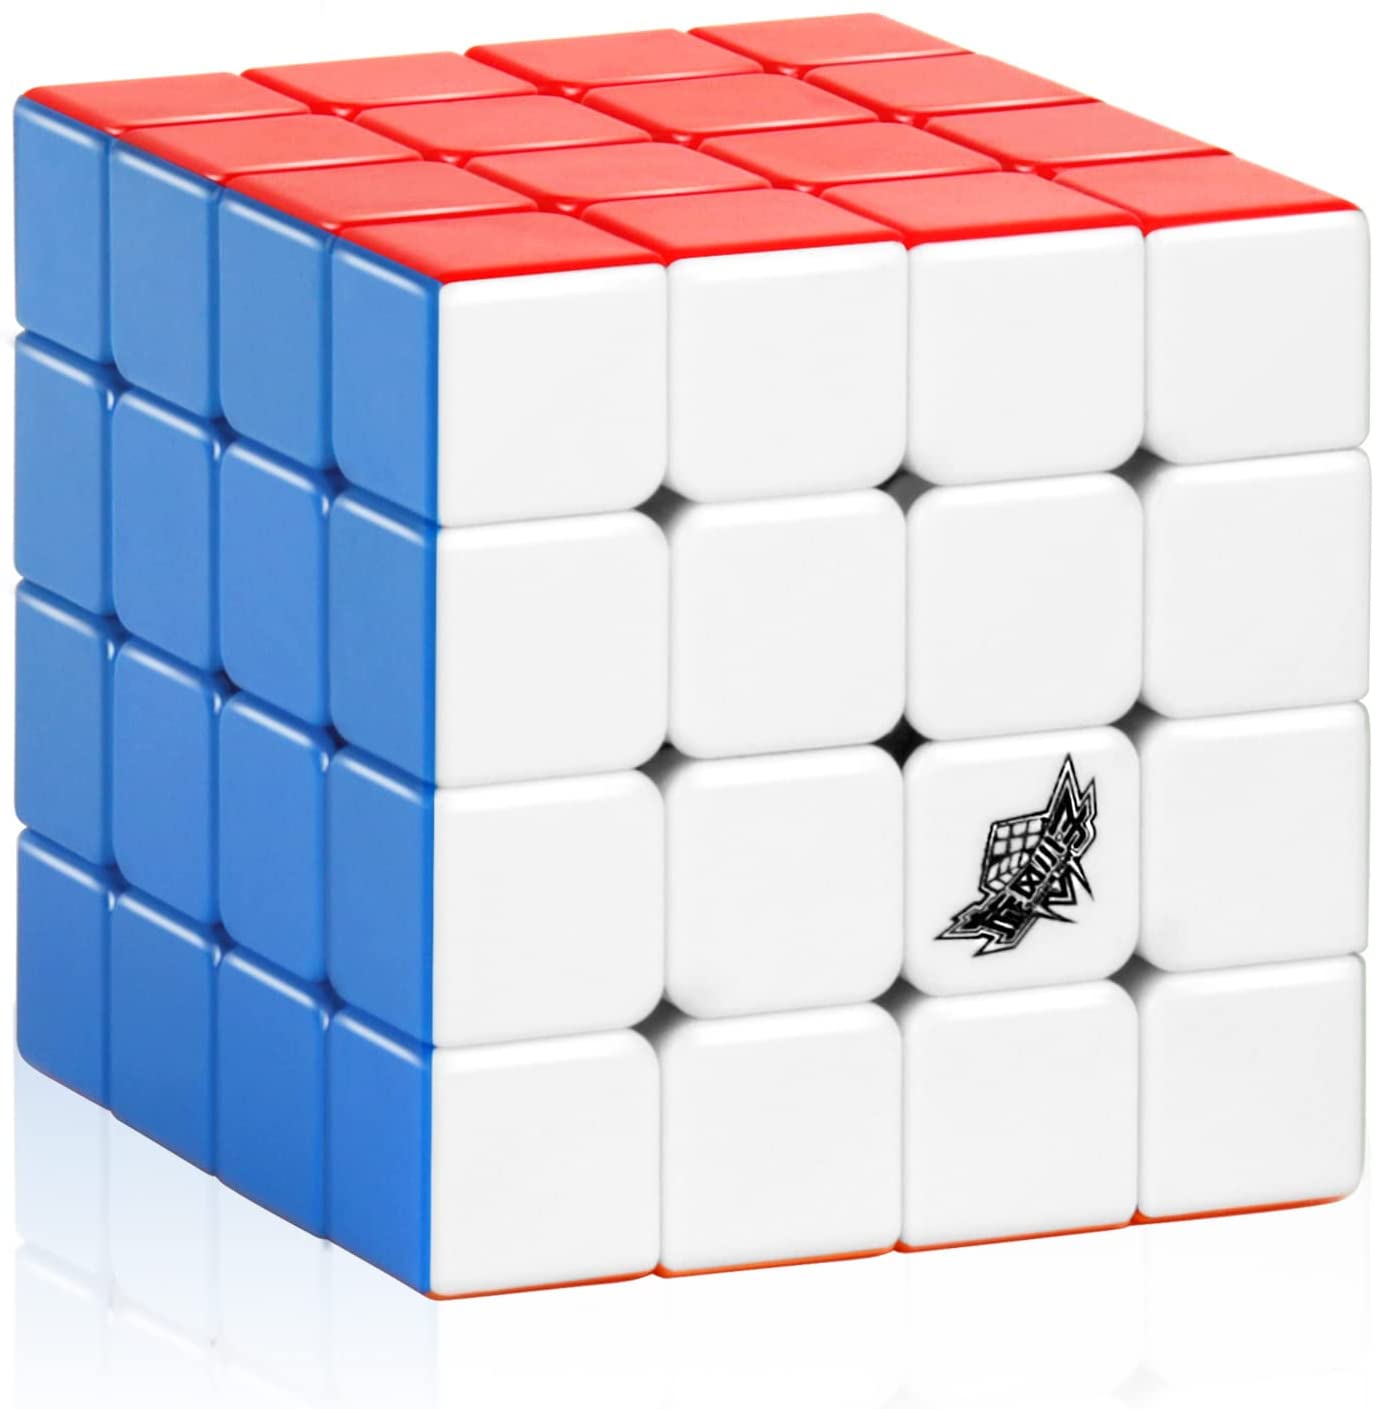 D-fantix cyclone boys 5x5 speed cube magic cube puzzle